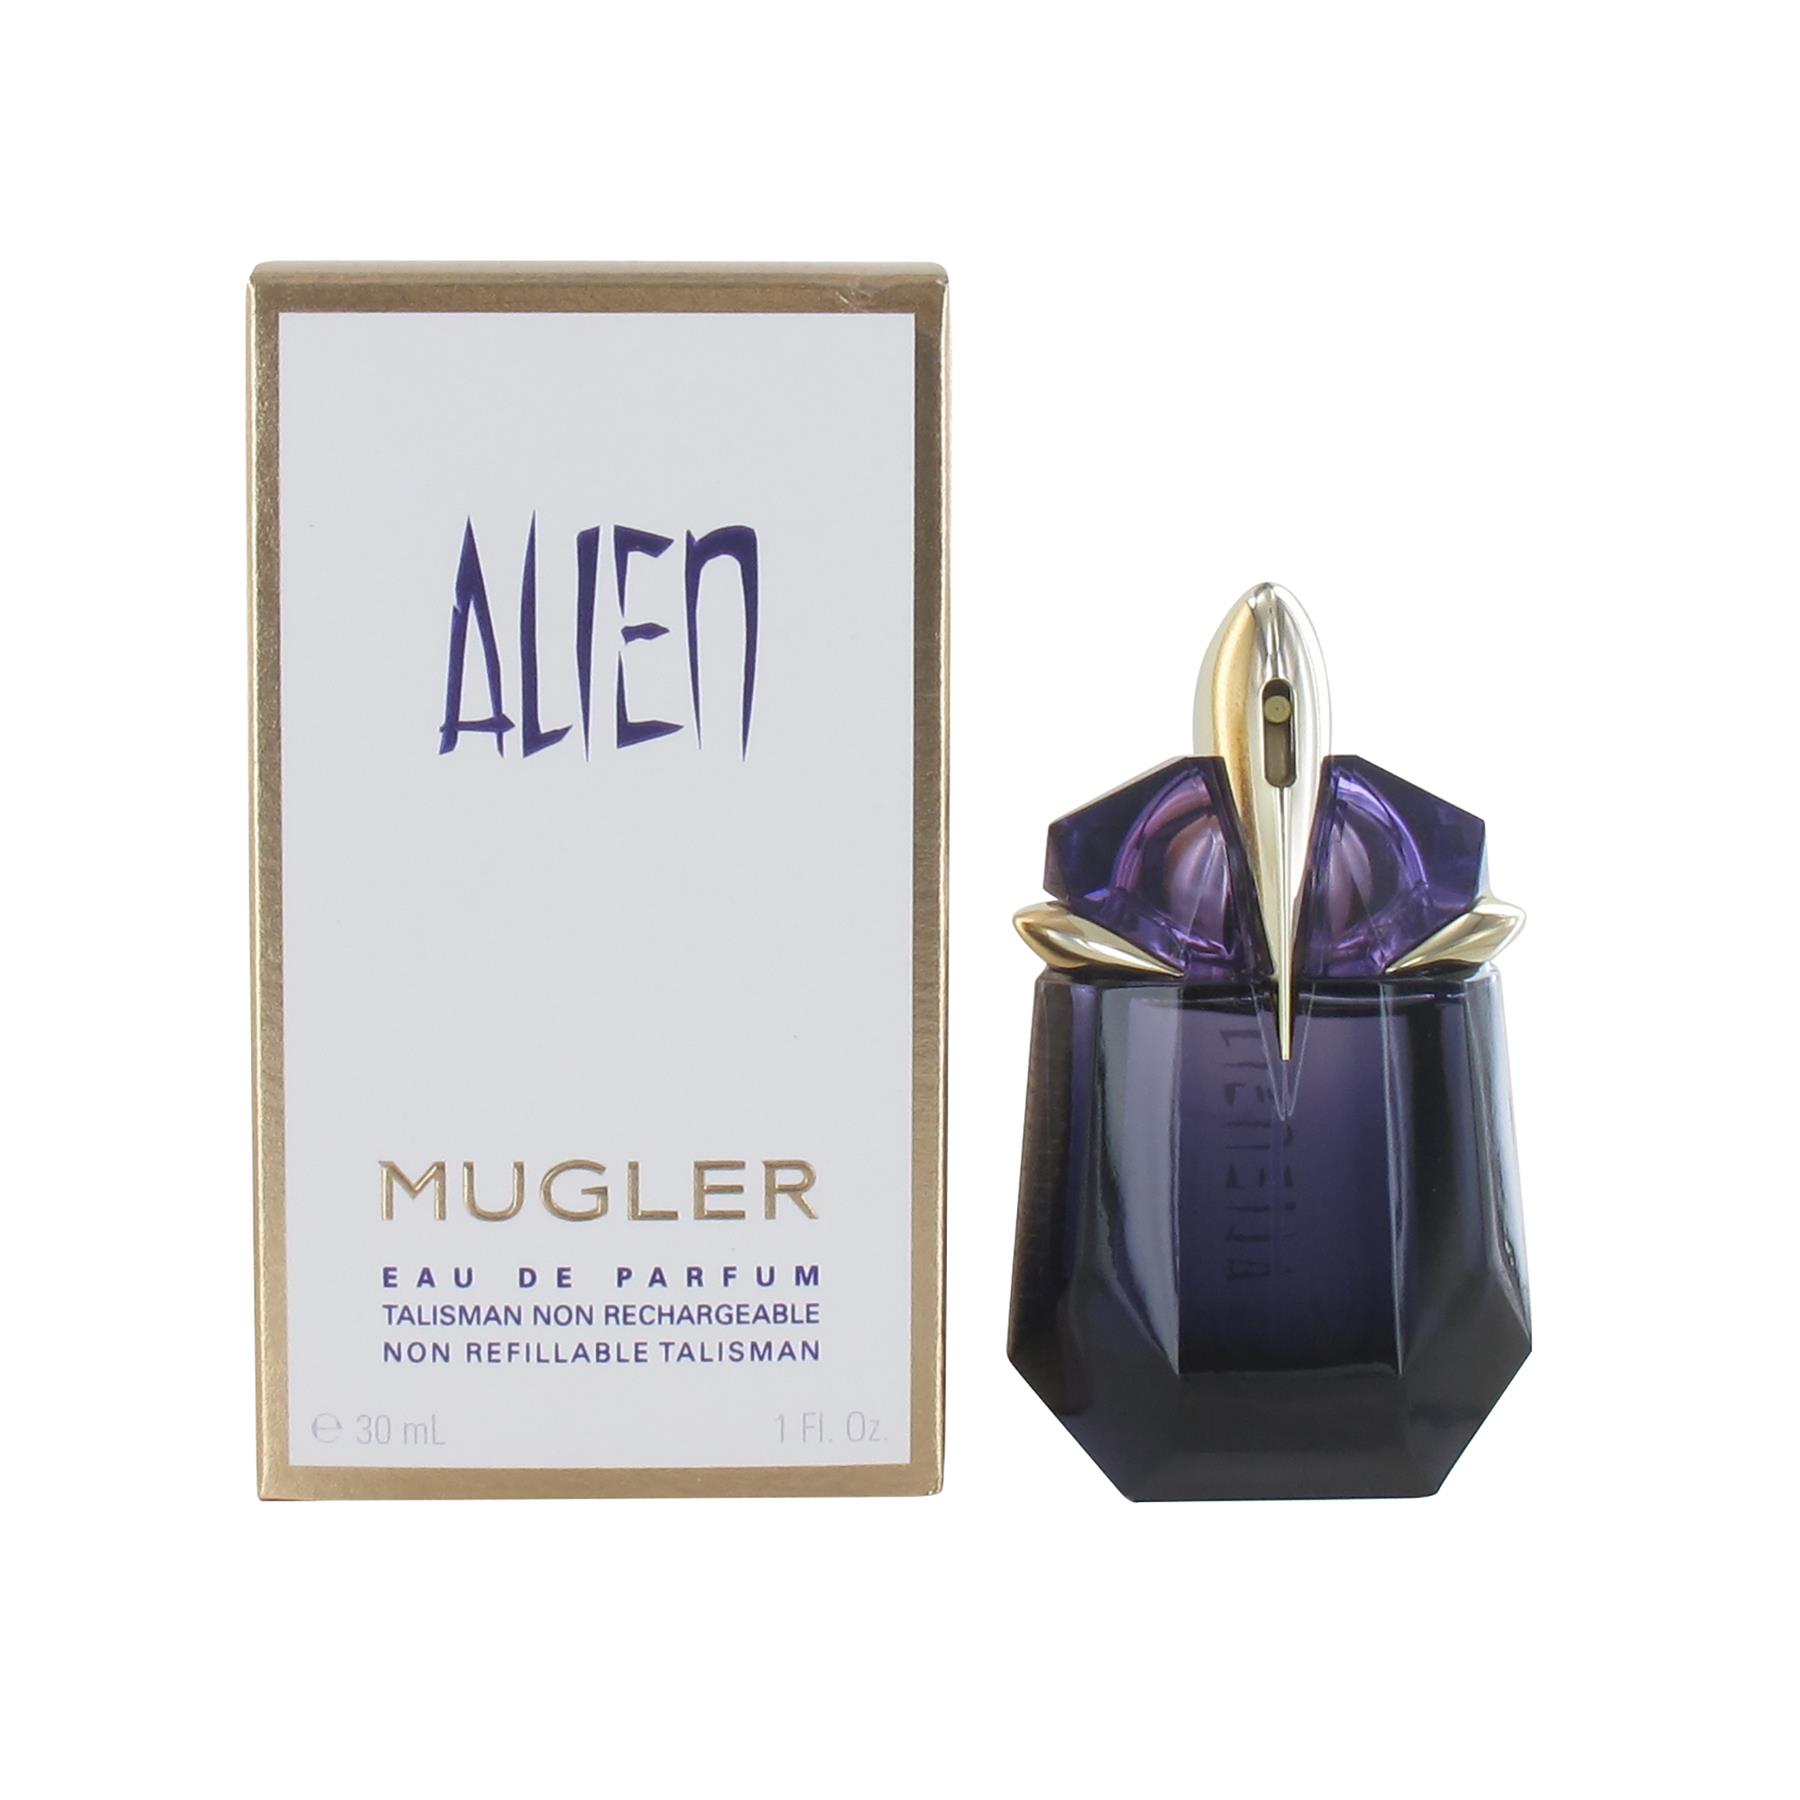 Thierry Mugler Alien Eau de Parfum 30ml Spray for Her from Perfume Plus Direct